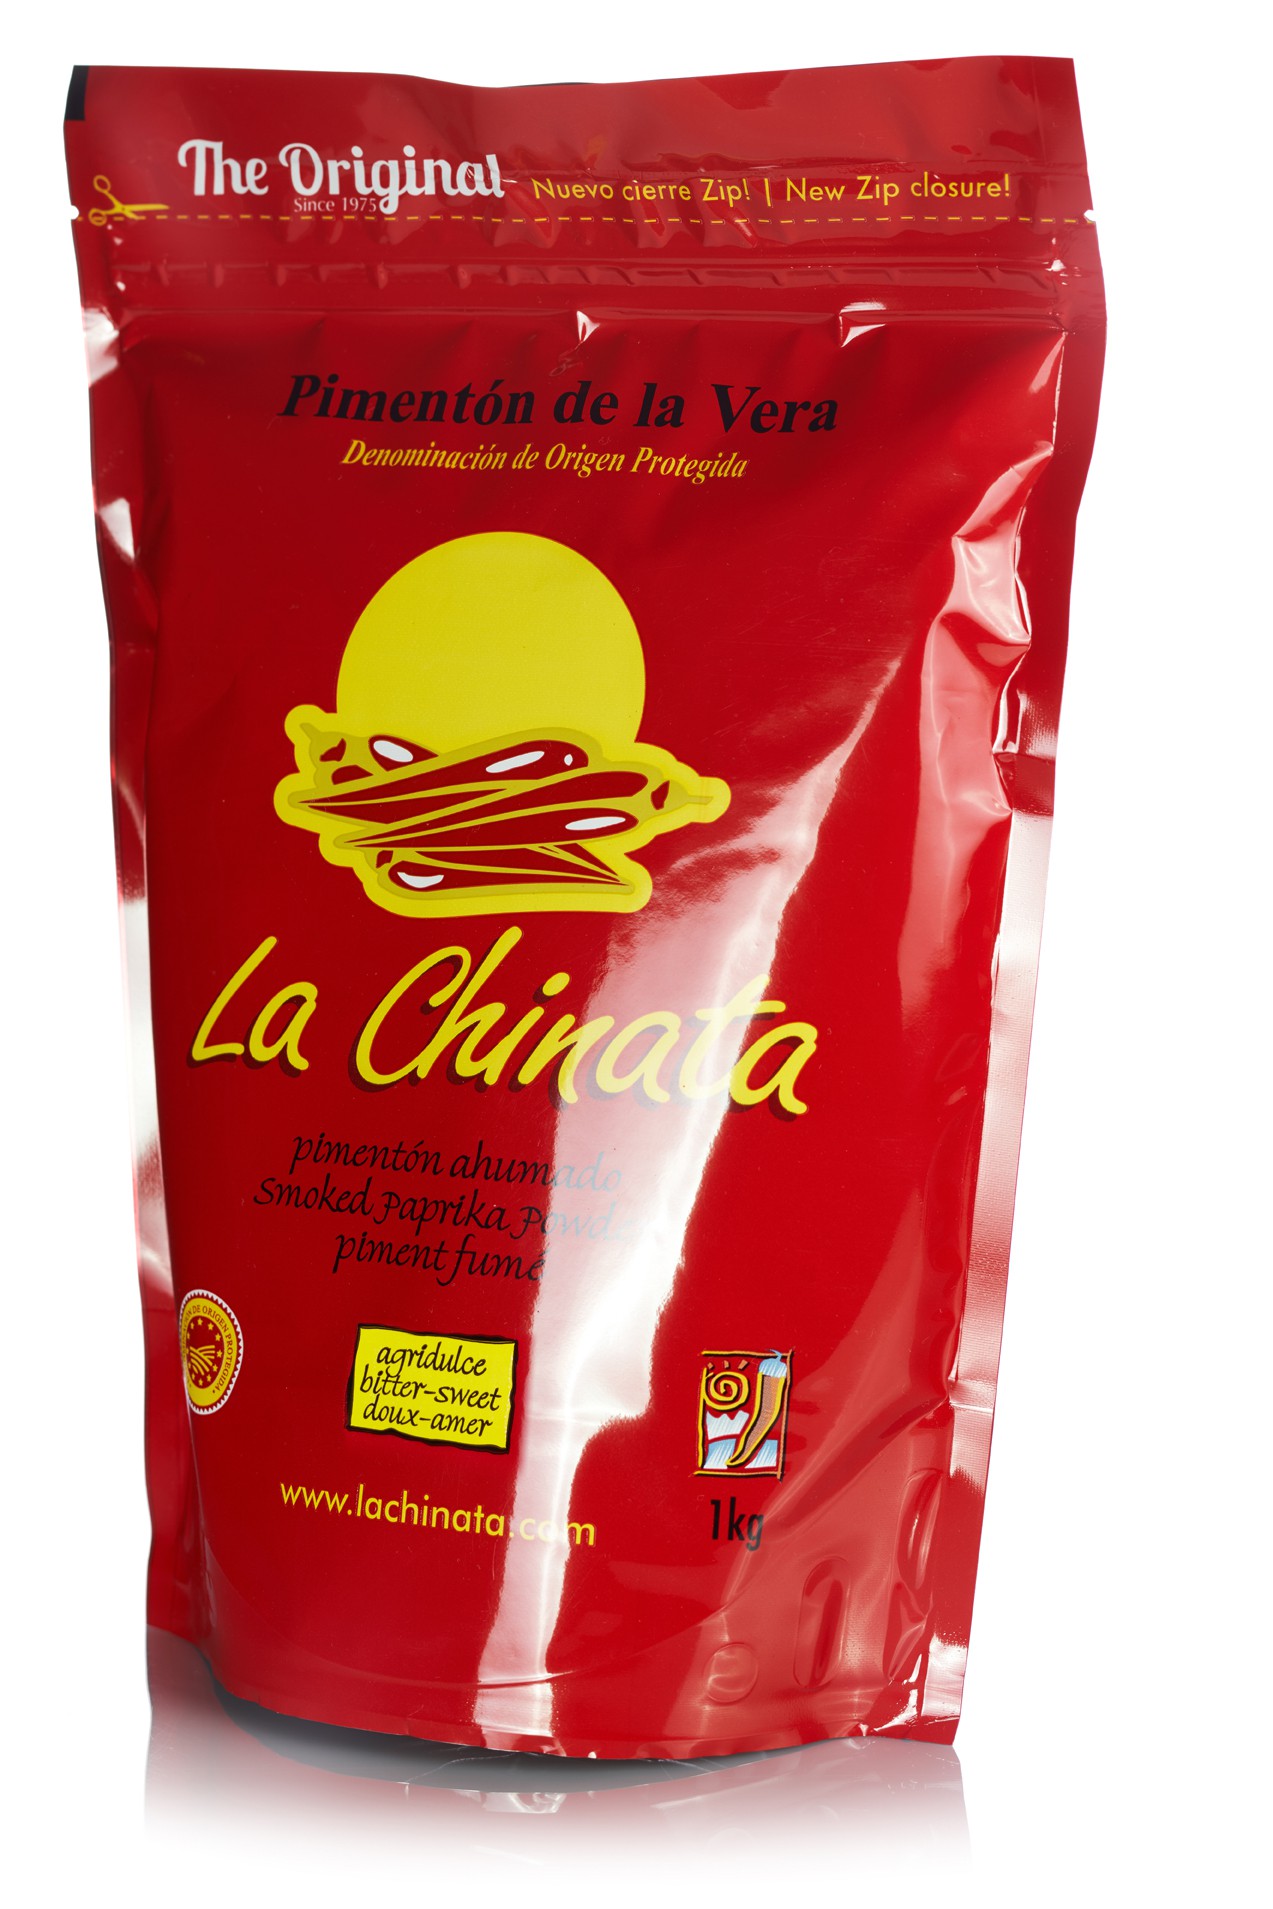 Bitter-Sweet Smoked Paprika Powder "La Chinata" 1 kg Bag 